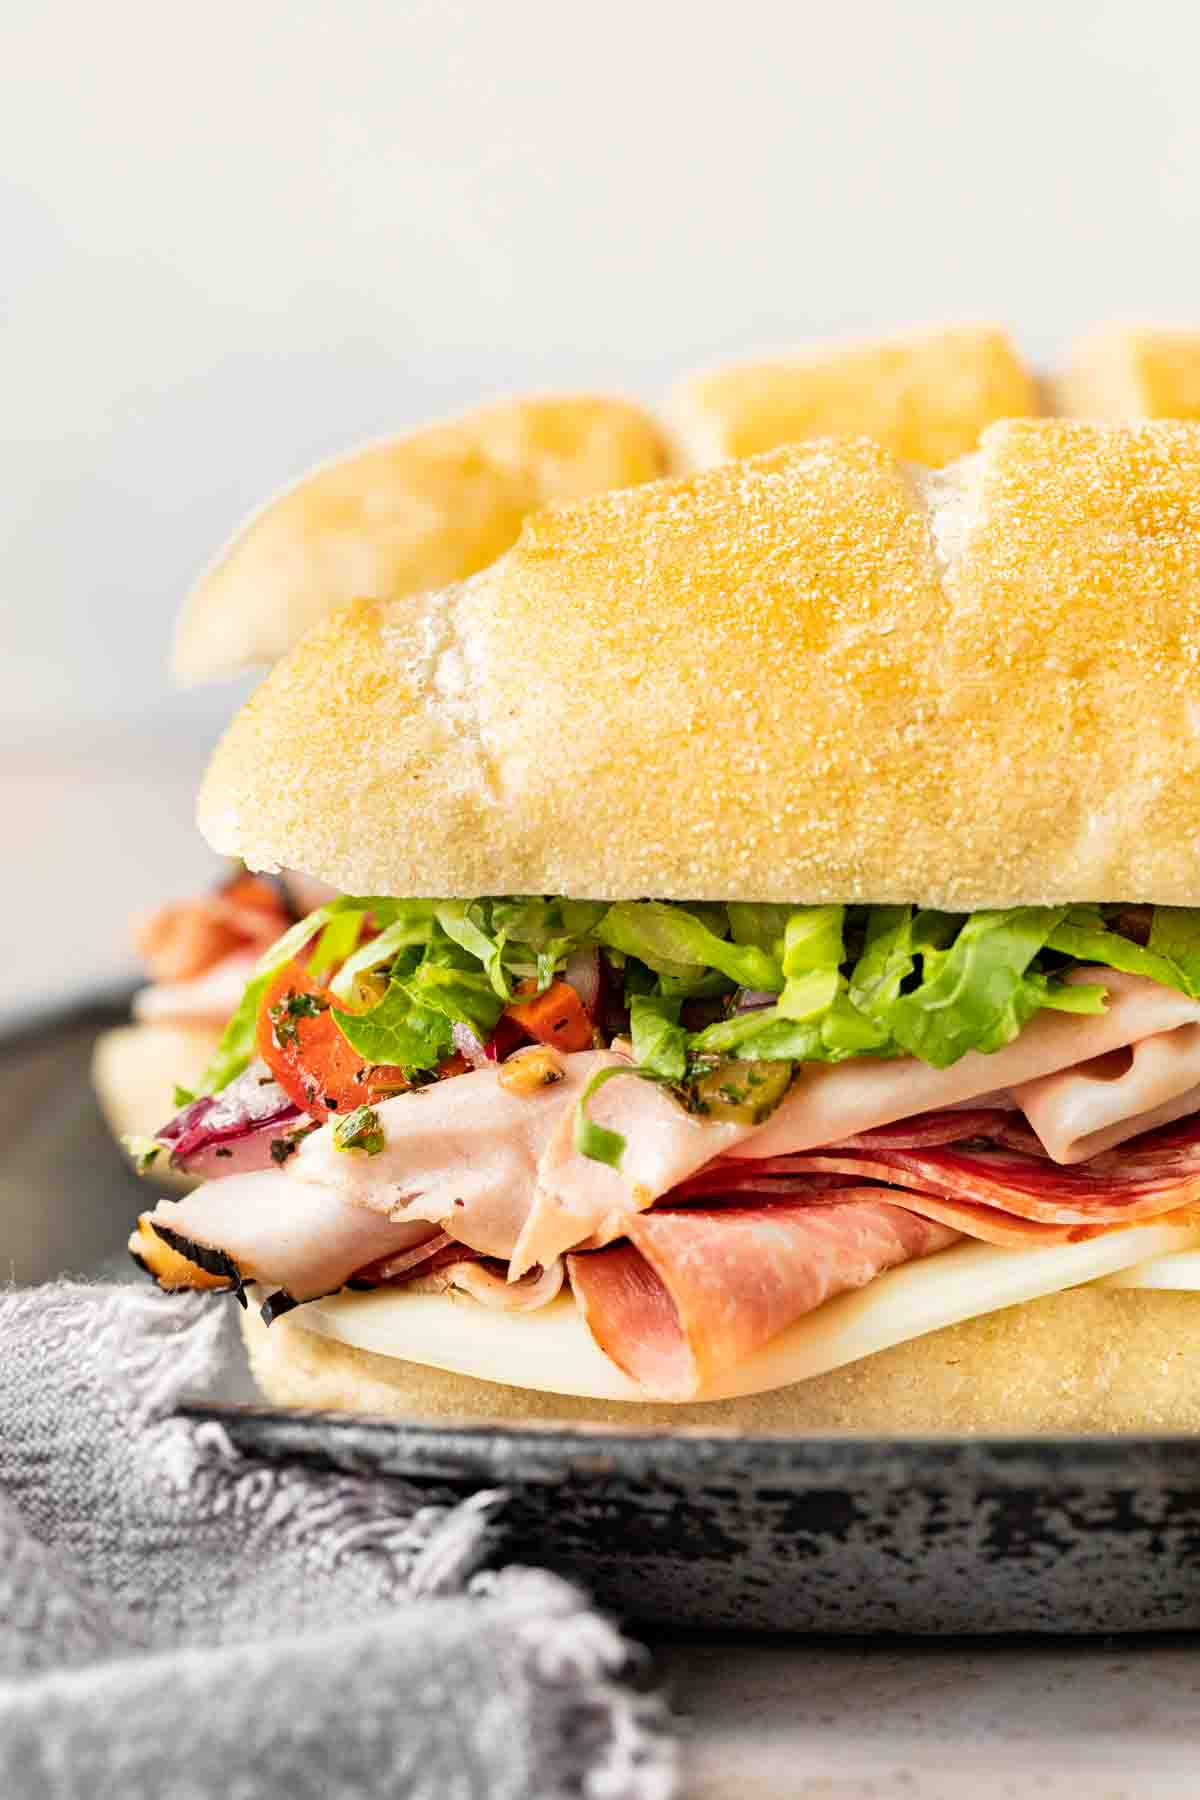 Italian Sub Sandwich on serving plate